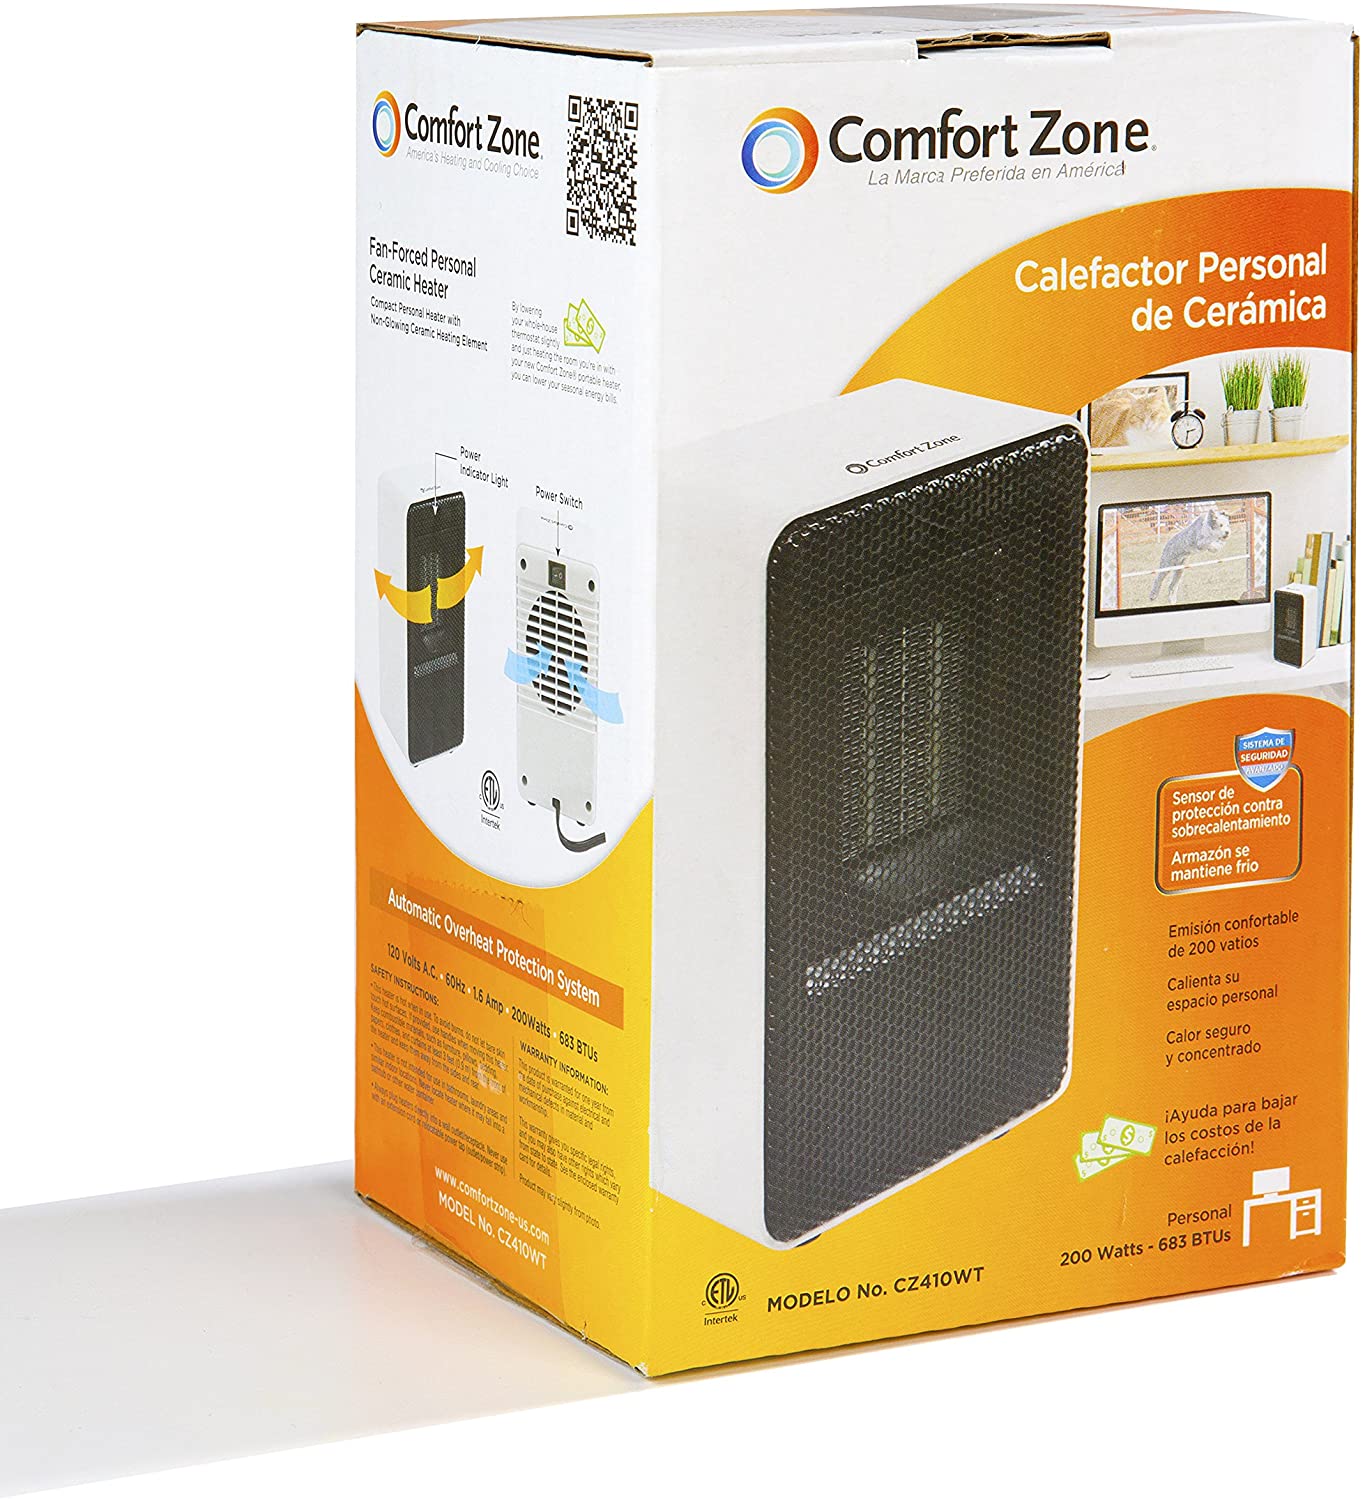 Comfort Zone CZ410WT Small Personal Ceramic Heater Fan.